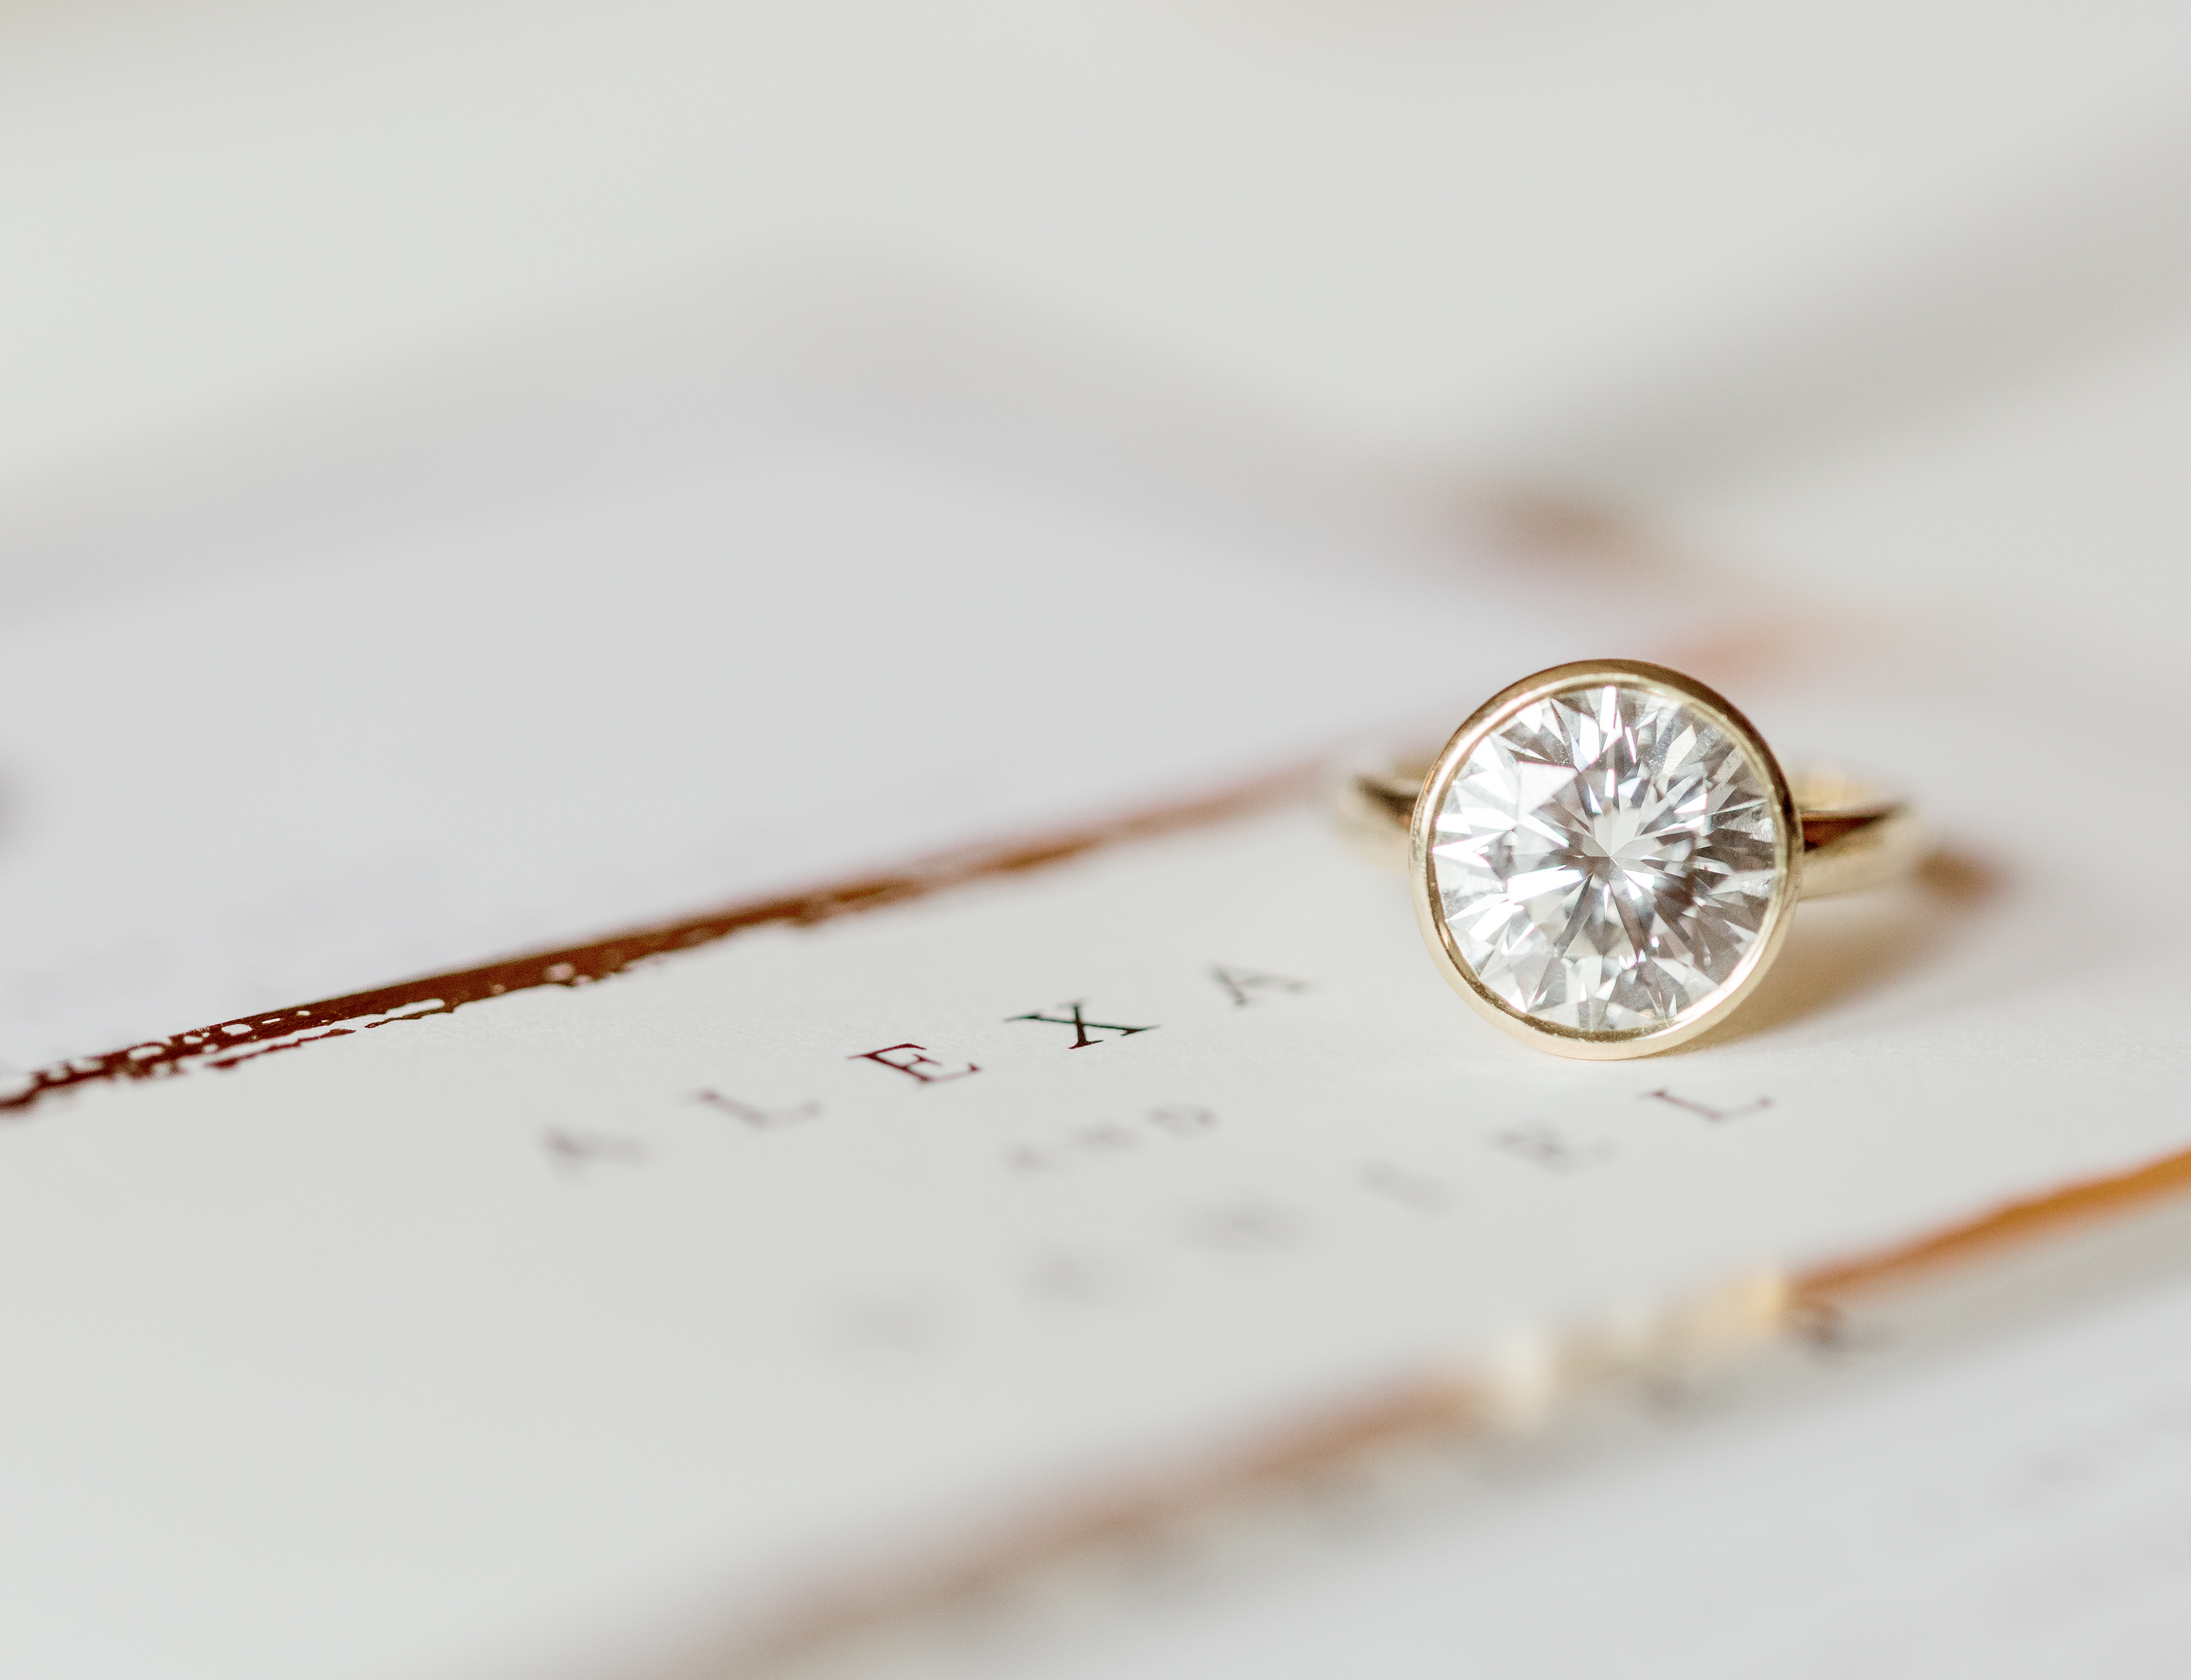 Beveled heirloom round diamond